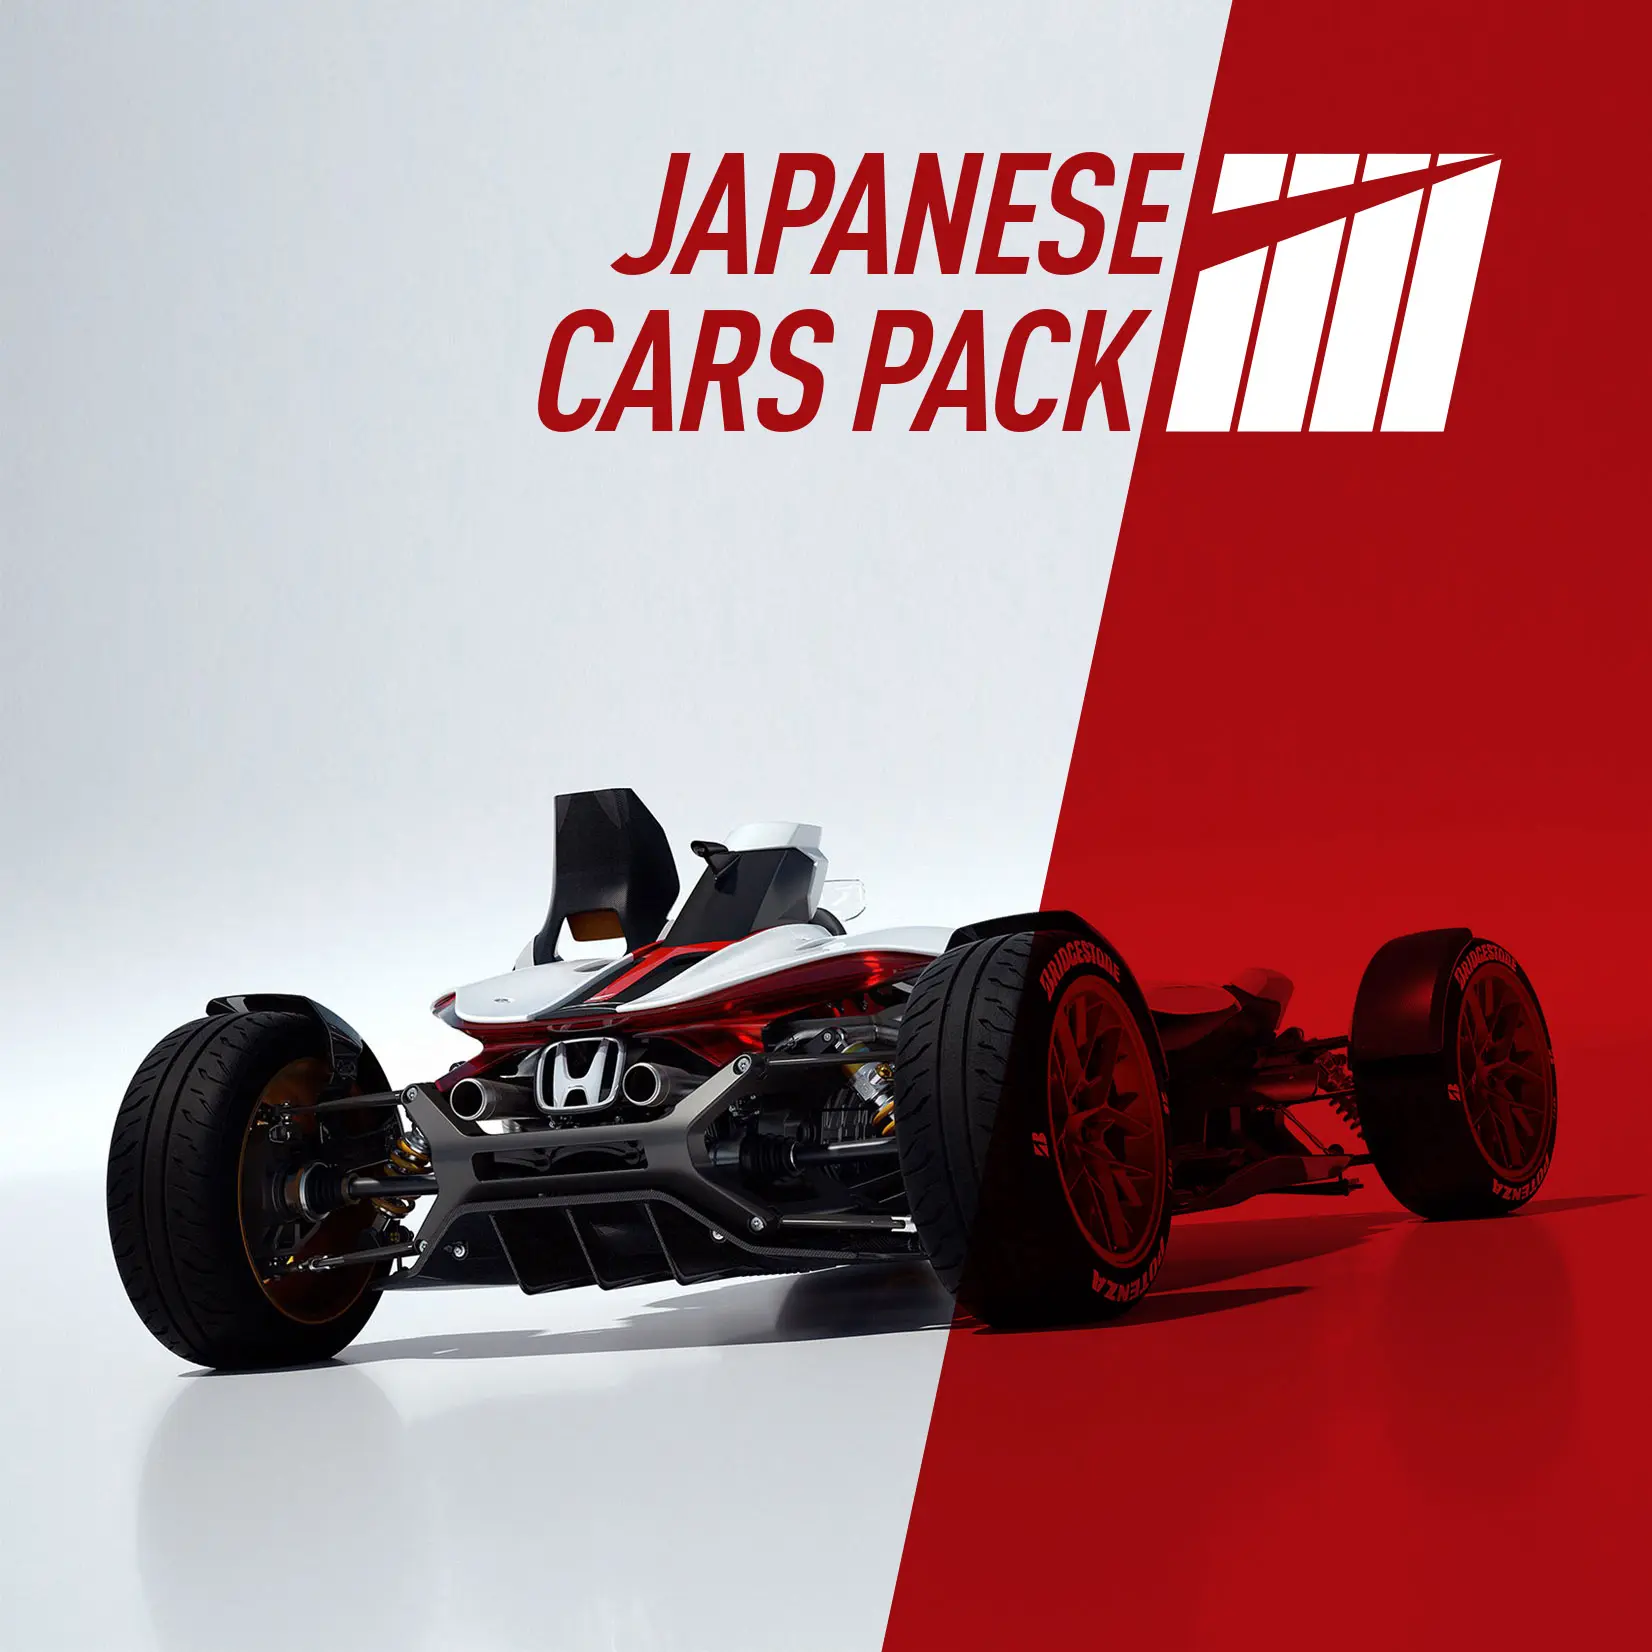 Project CARS 2 - Japanese Cars Pack DLC (EU) (PC) - Steam - Digital Code